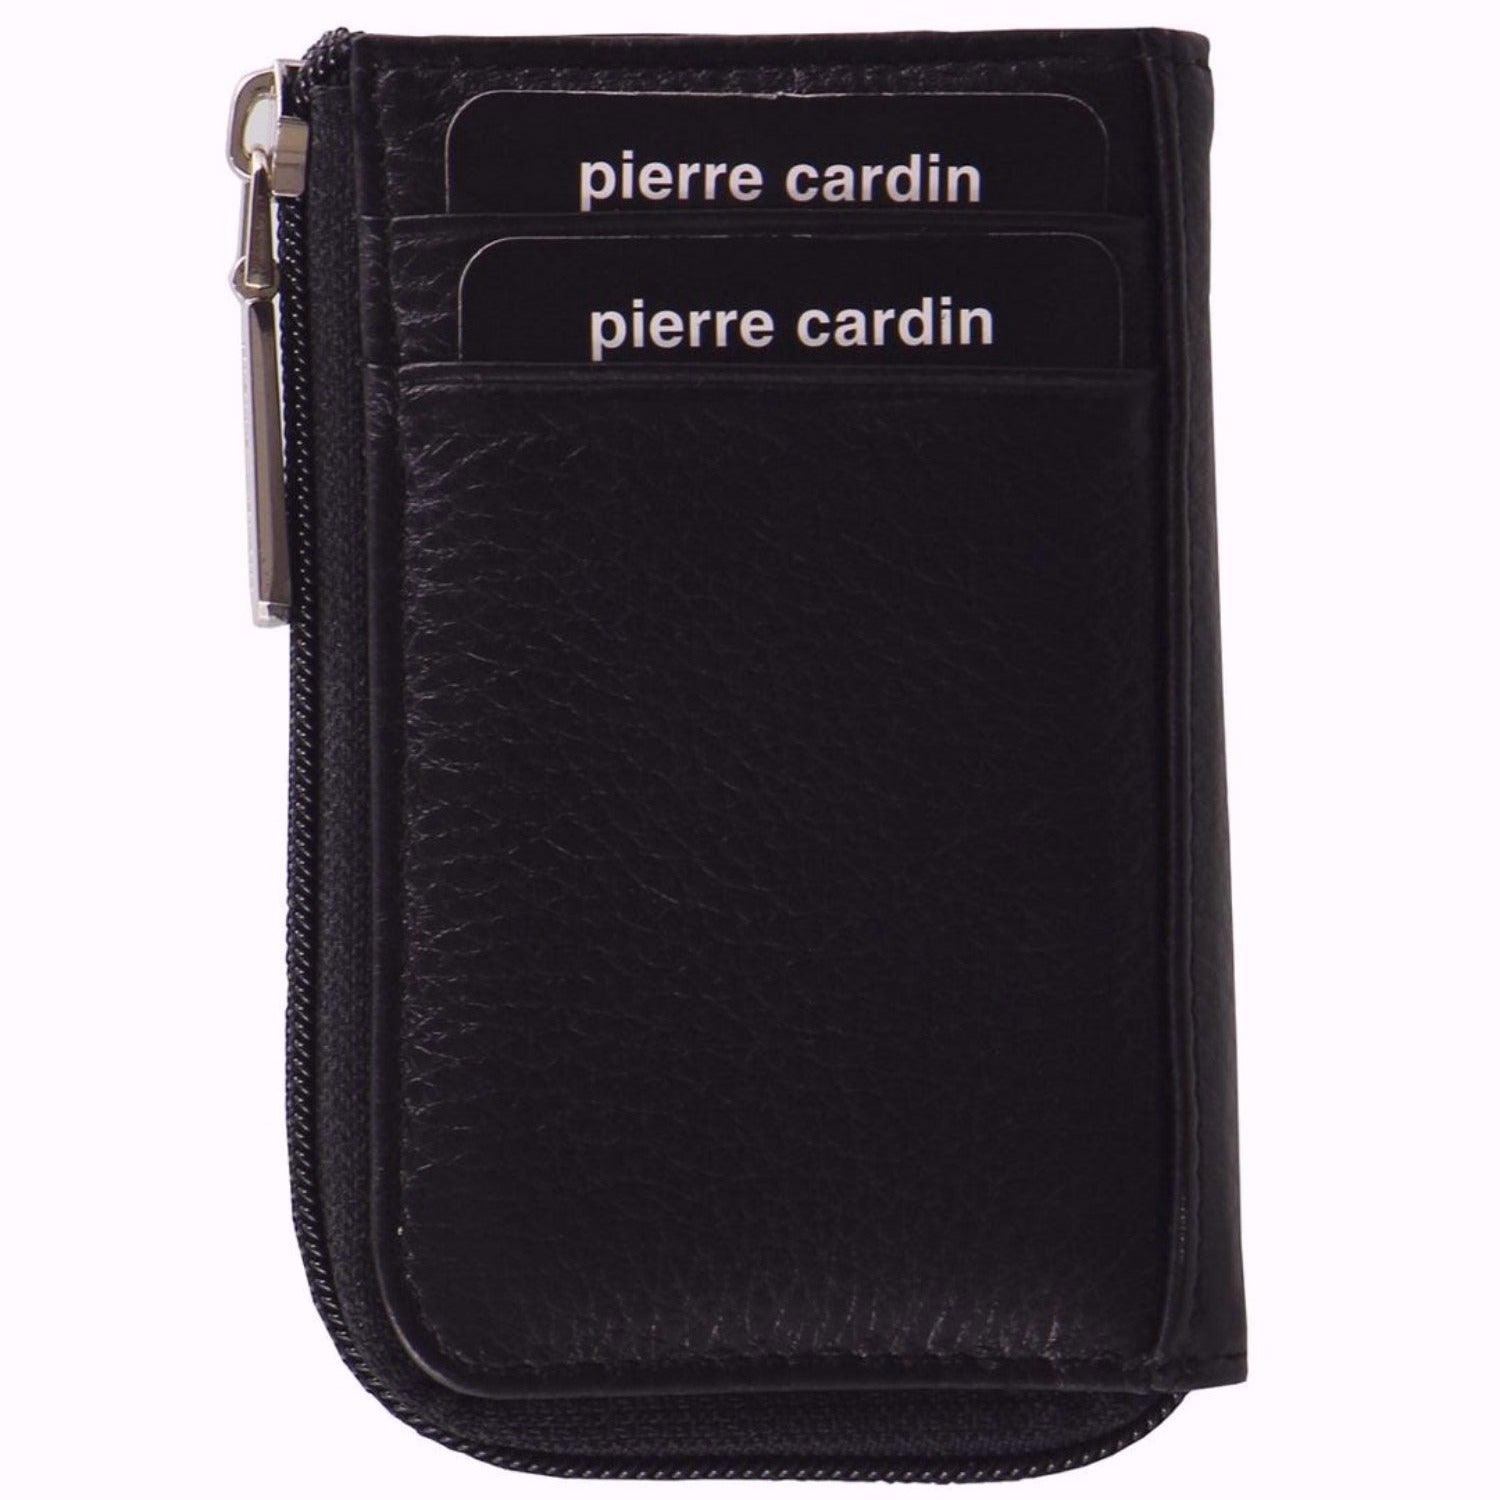 Pierre Cardin Italian Leather Key + Credit Card Holder in Black